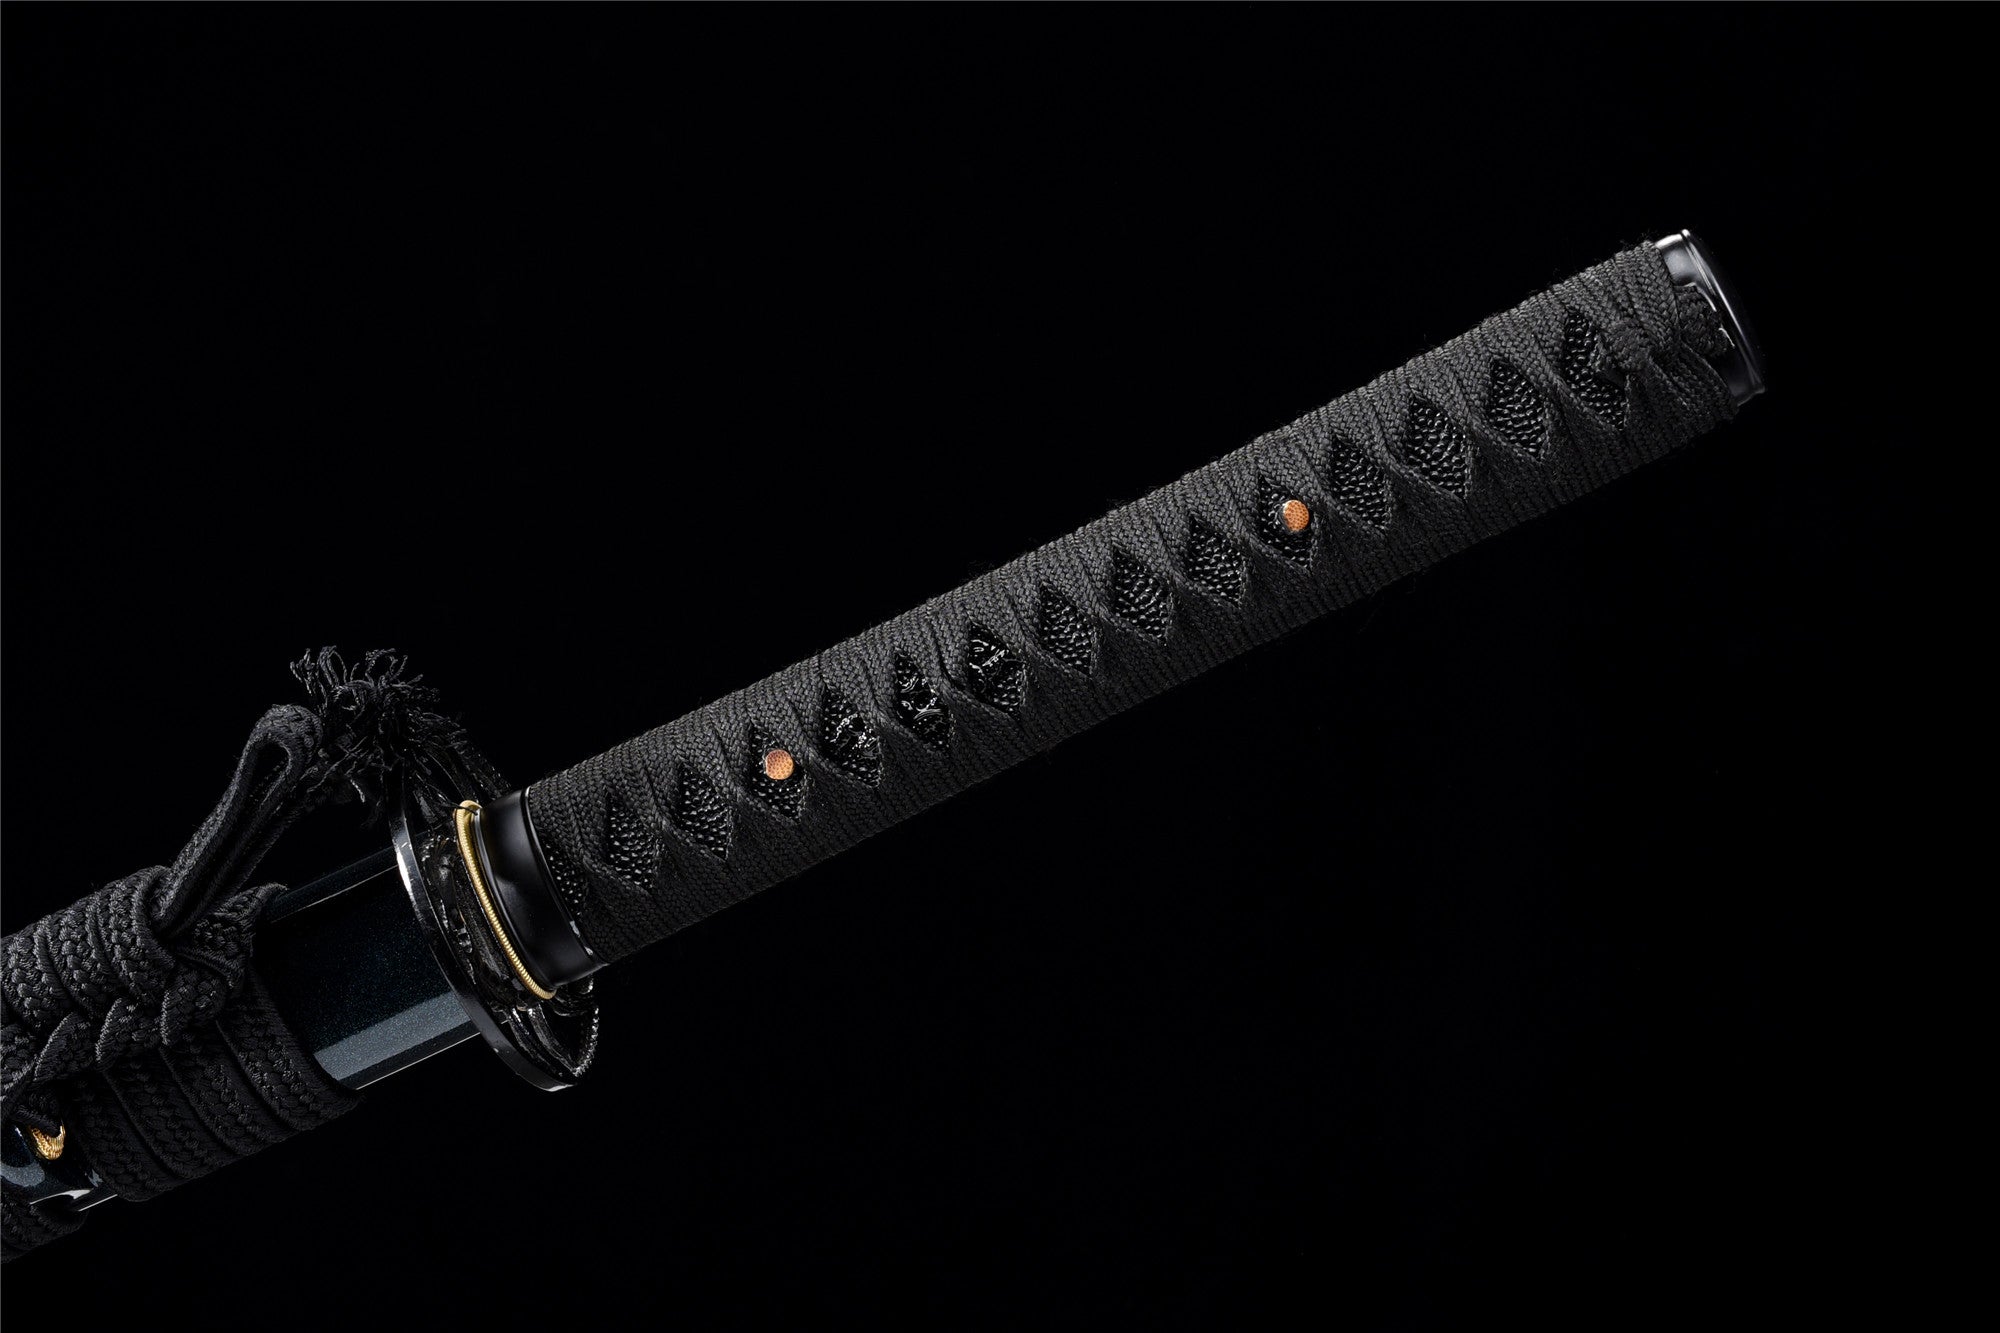 Blue Killer Katana,Japanese Samurai Sword,Real Katana,Handmade sword,clay tempered t-10 high carbon steel with hamon